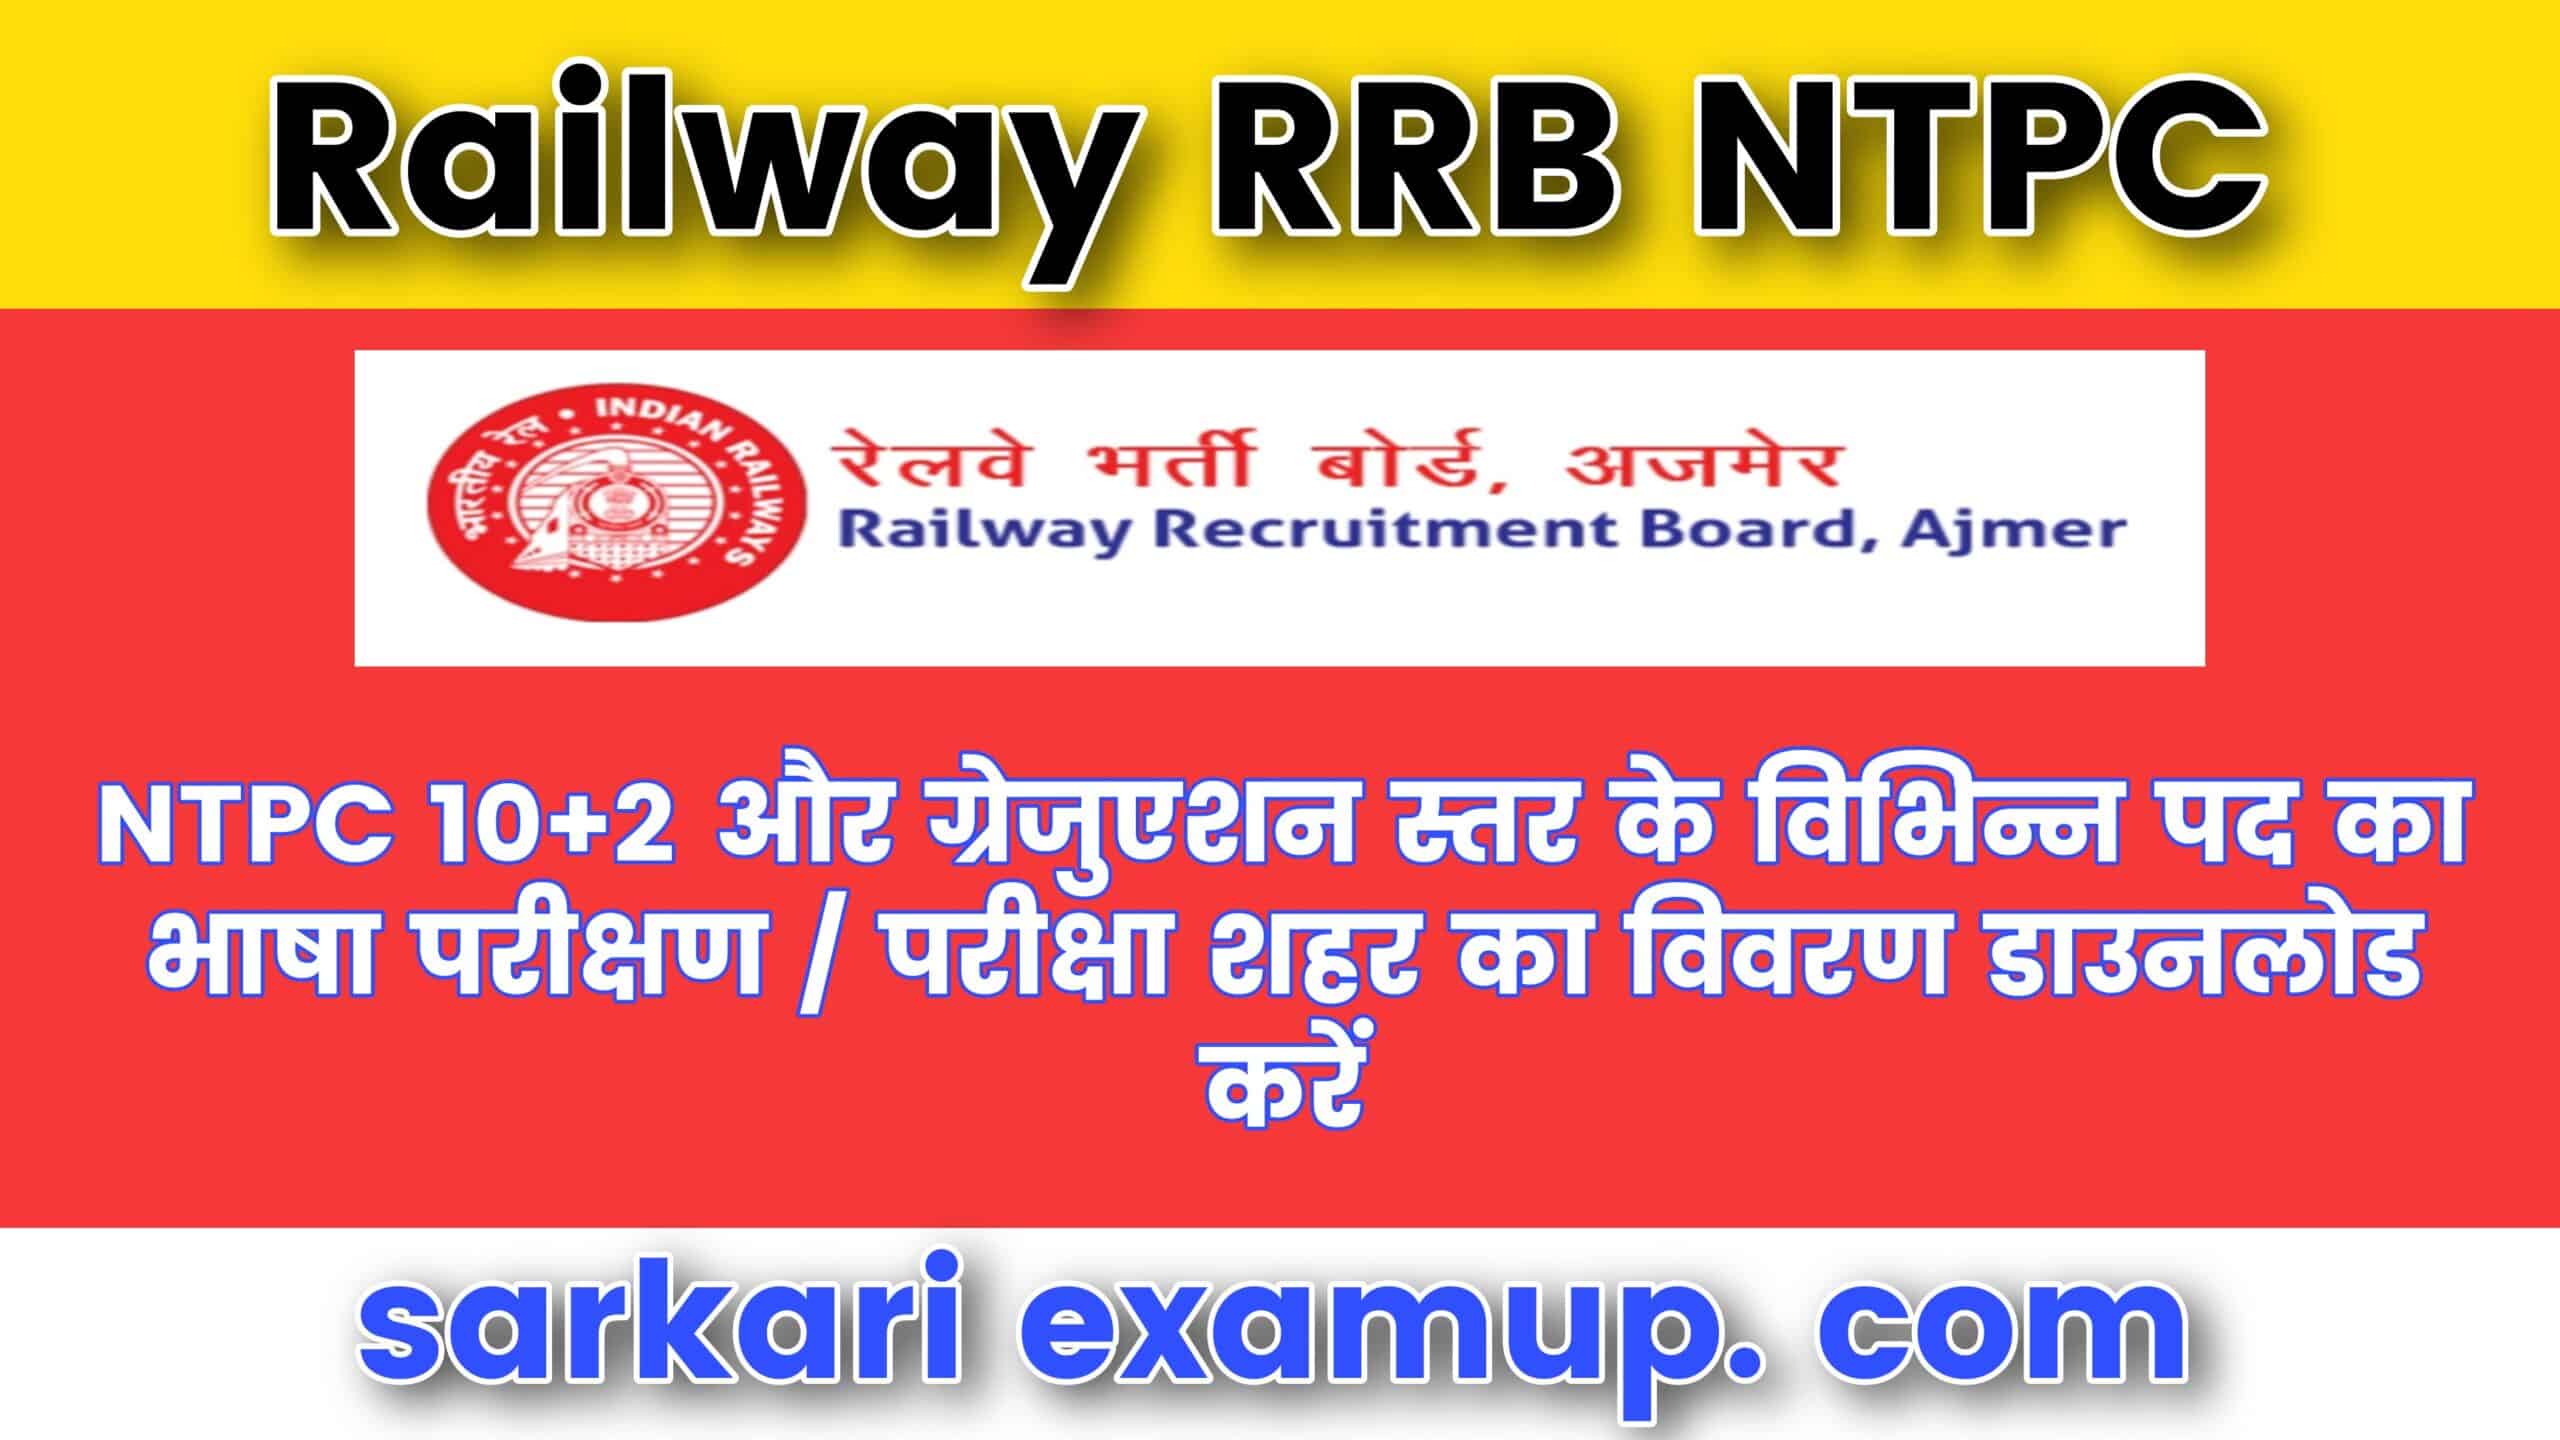 Railway RRB NTPC Aptitude Test Admit Card Exam City 2022